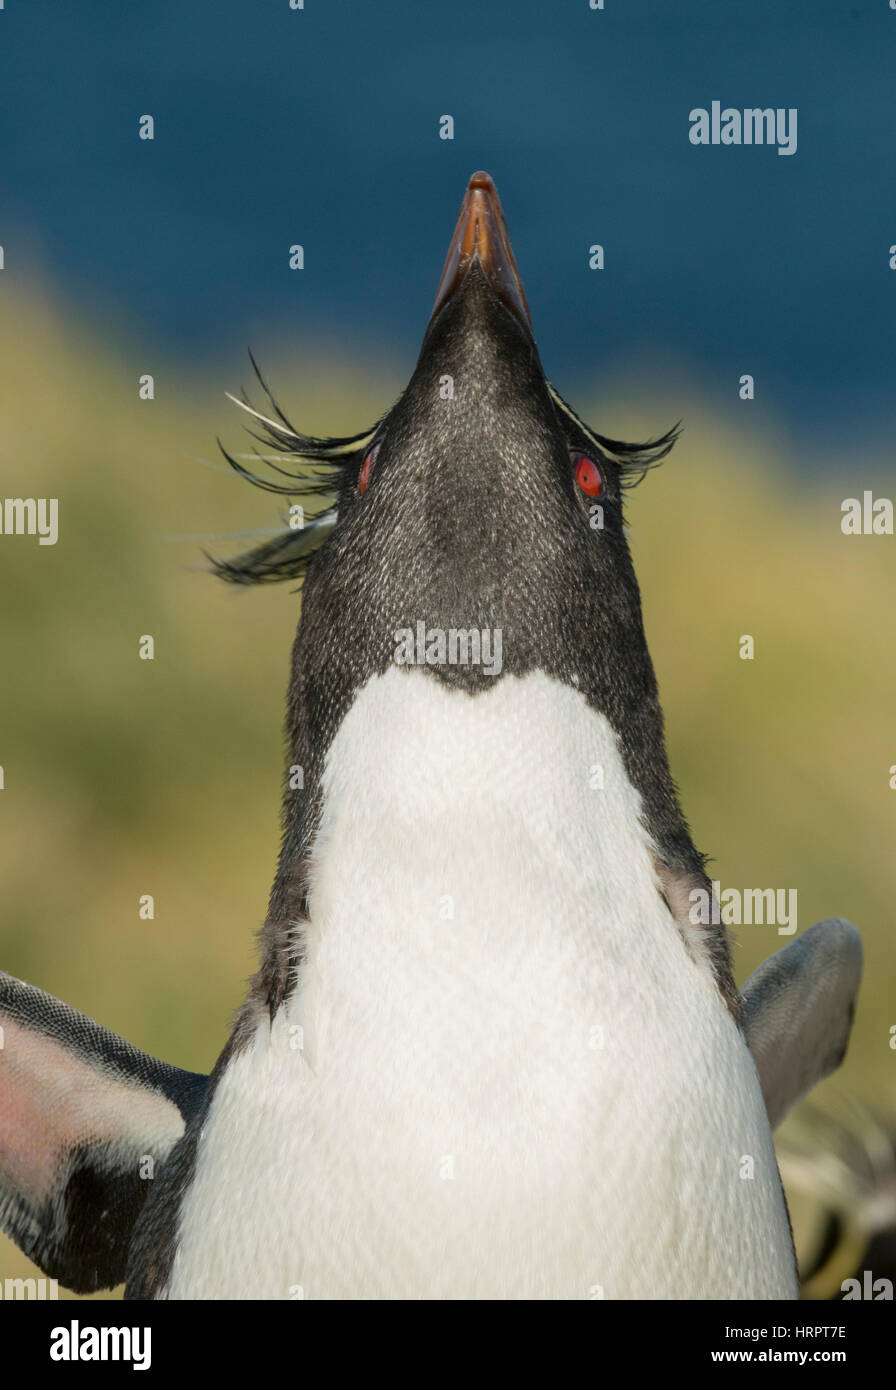 Rockhopper Penguins (Eudyptes chrysocome) Displaying, showing chin, Falkland Islands Stock Photo